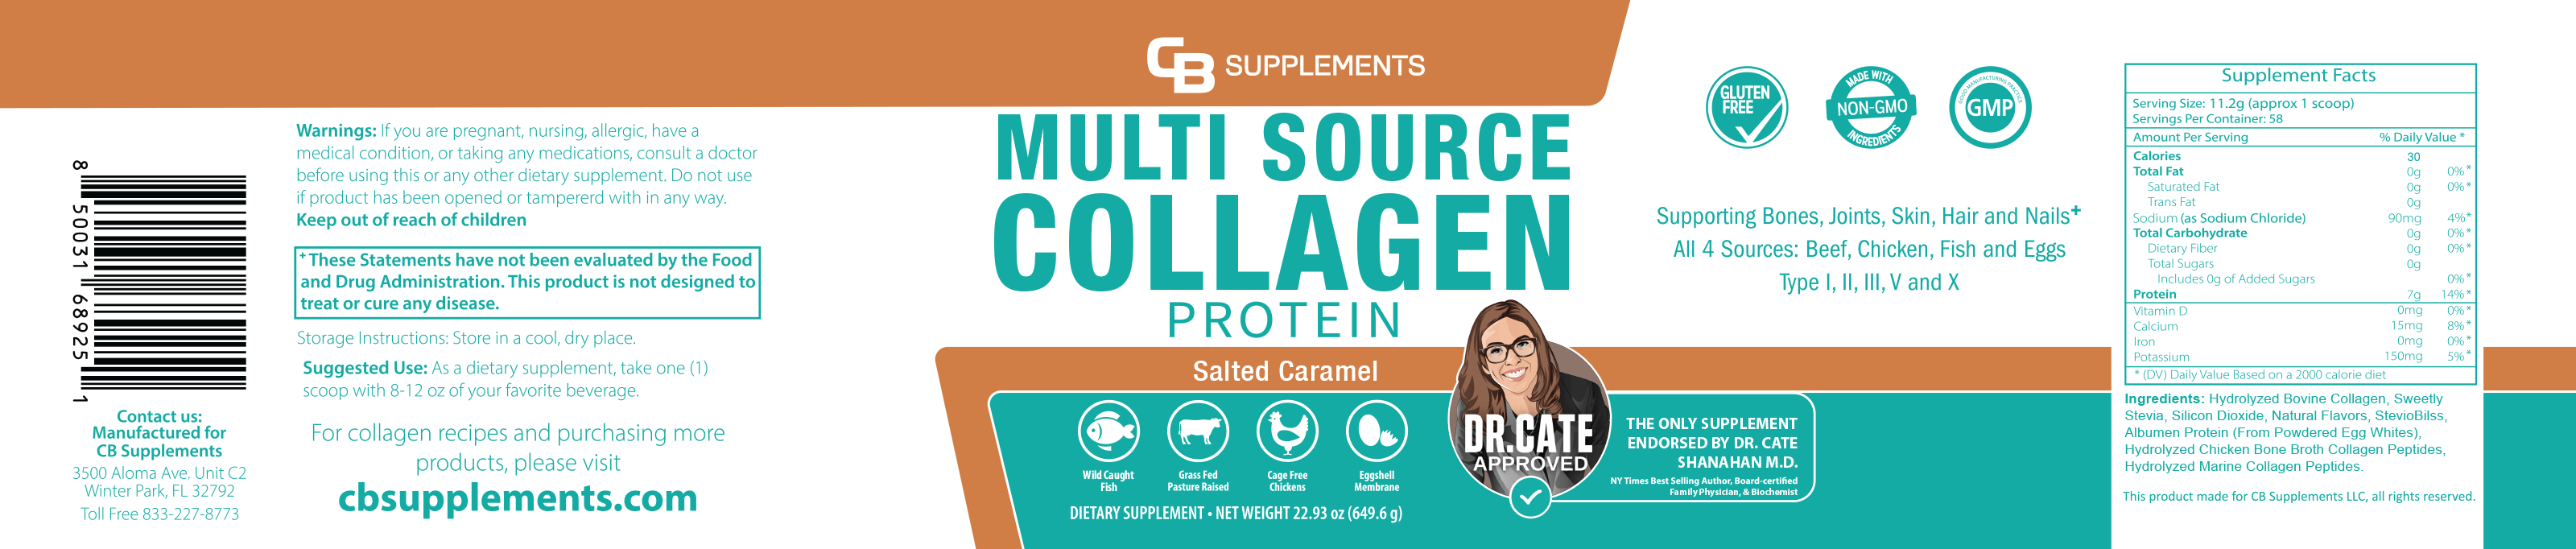 Salted Caramel Multi Collagen Protein Powder Label and Ingredients